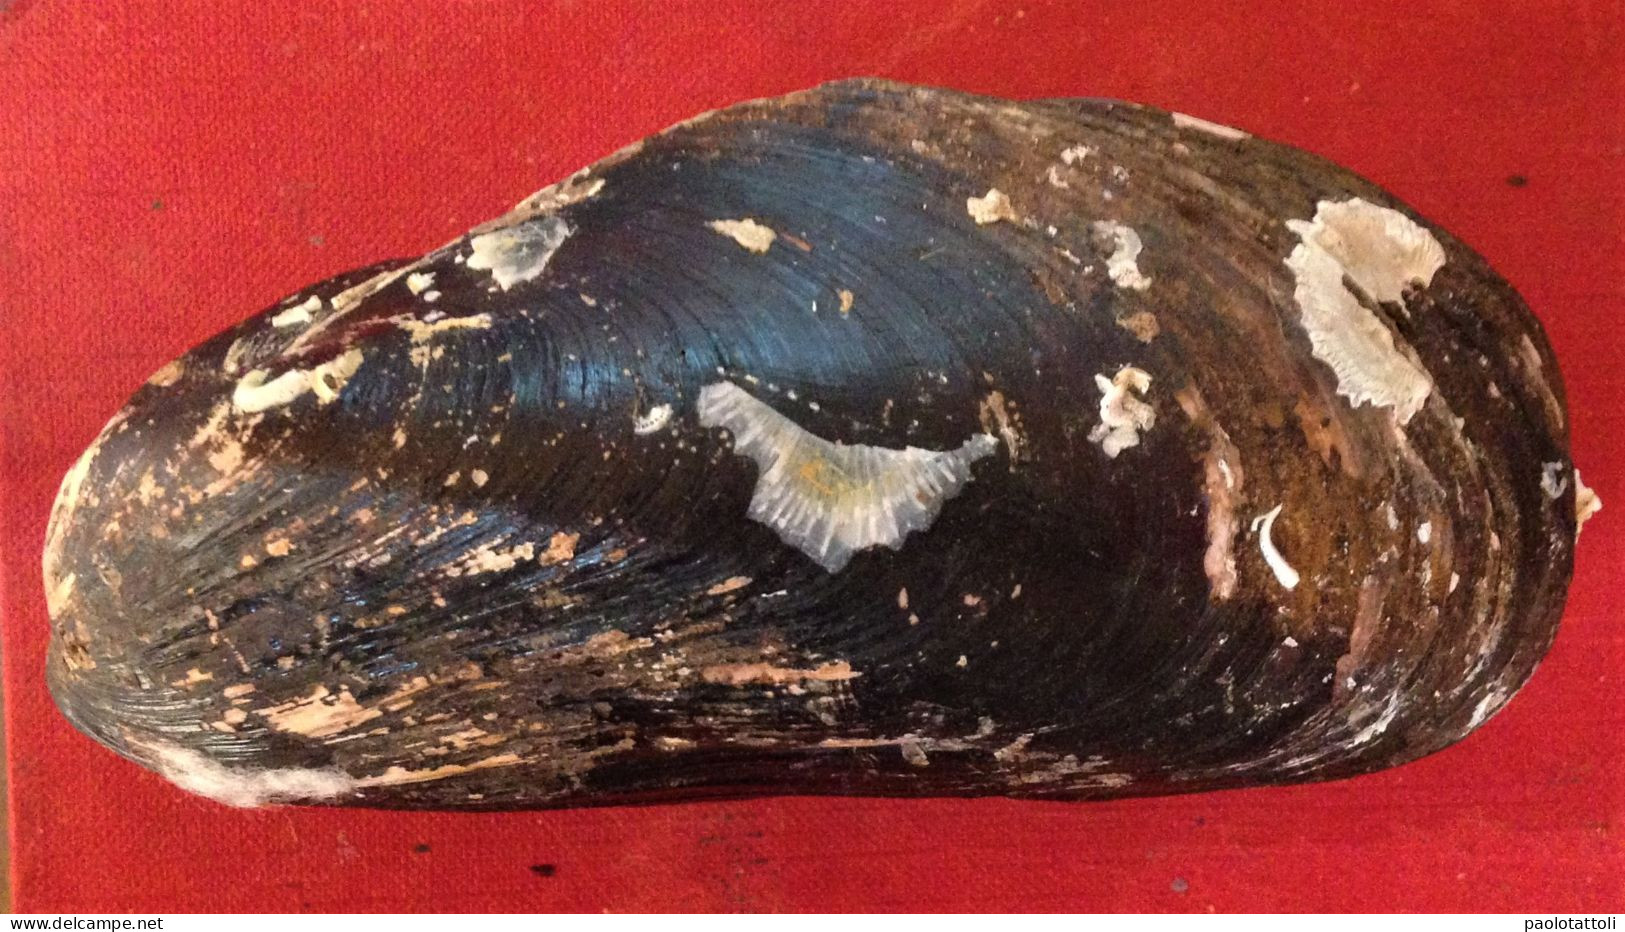 Modiolus Modiolus ( Linnè, 1758)- North Sea. 121x 56mm. Trawled By Fishing Boat On Mud Between 199-150mtrs Depth. - Seashells & Snail-shells